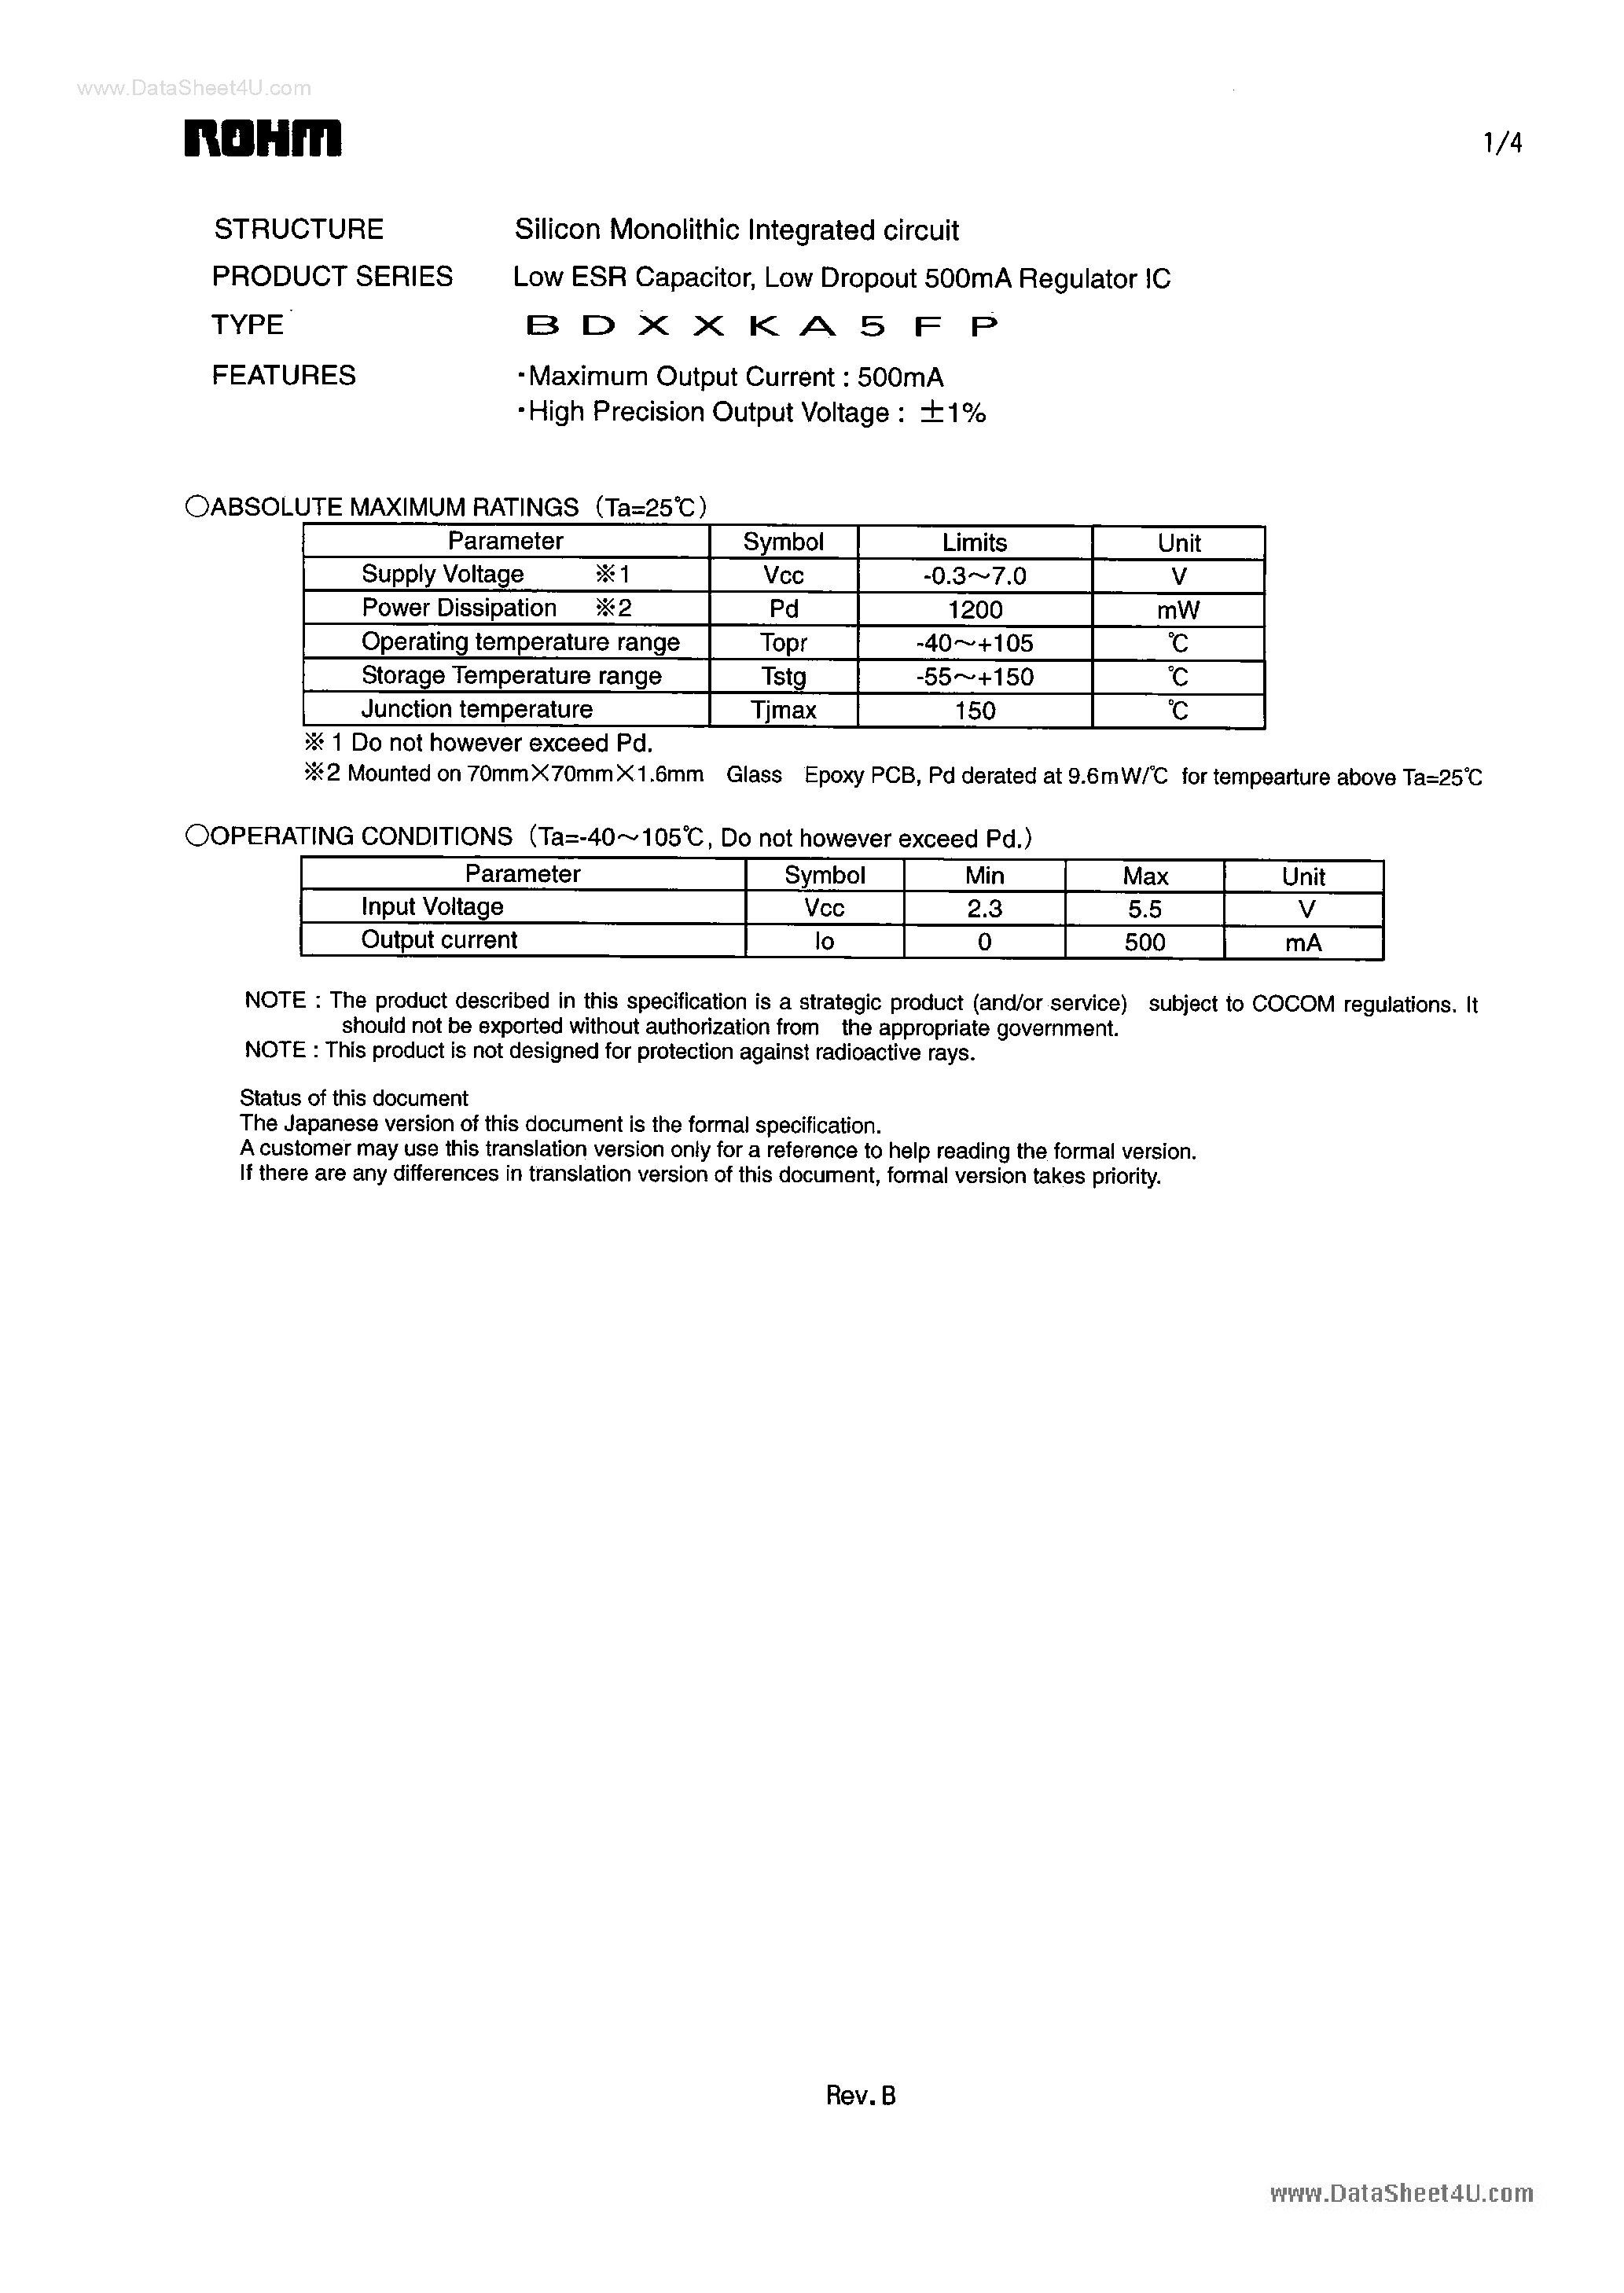 Datasheet BD10KA5FP - Low ESR Capacitor page 1